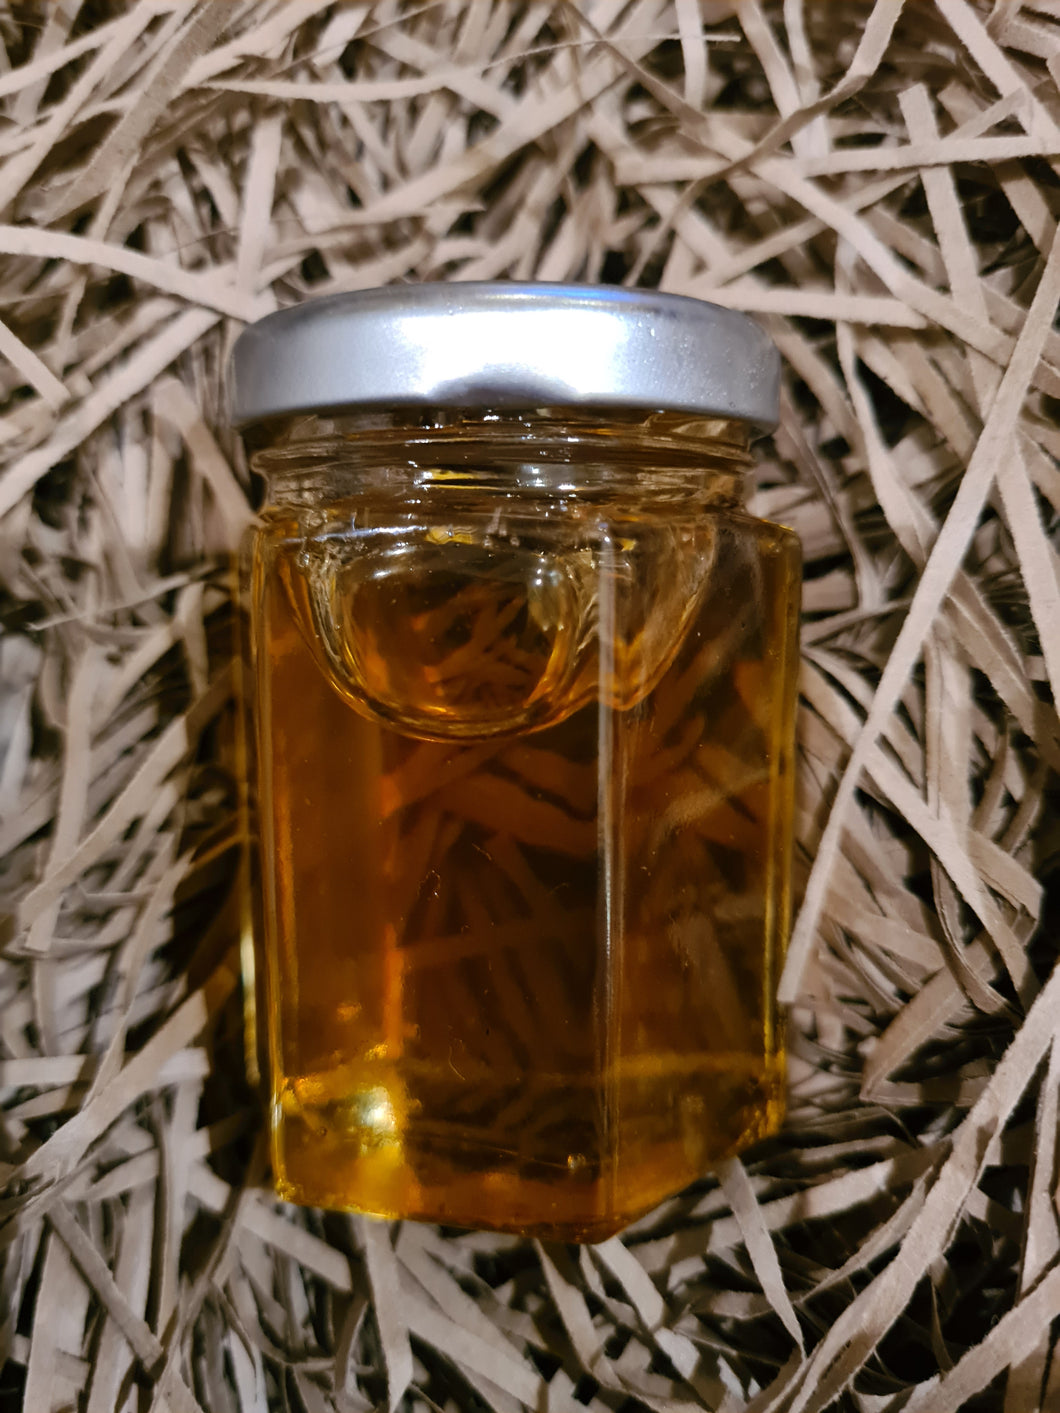 60ml Latimer honey